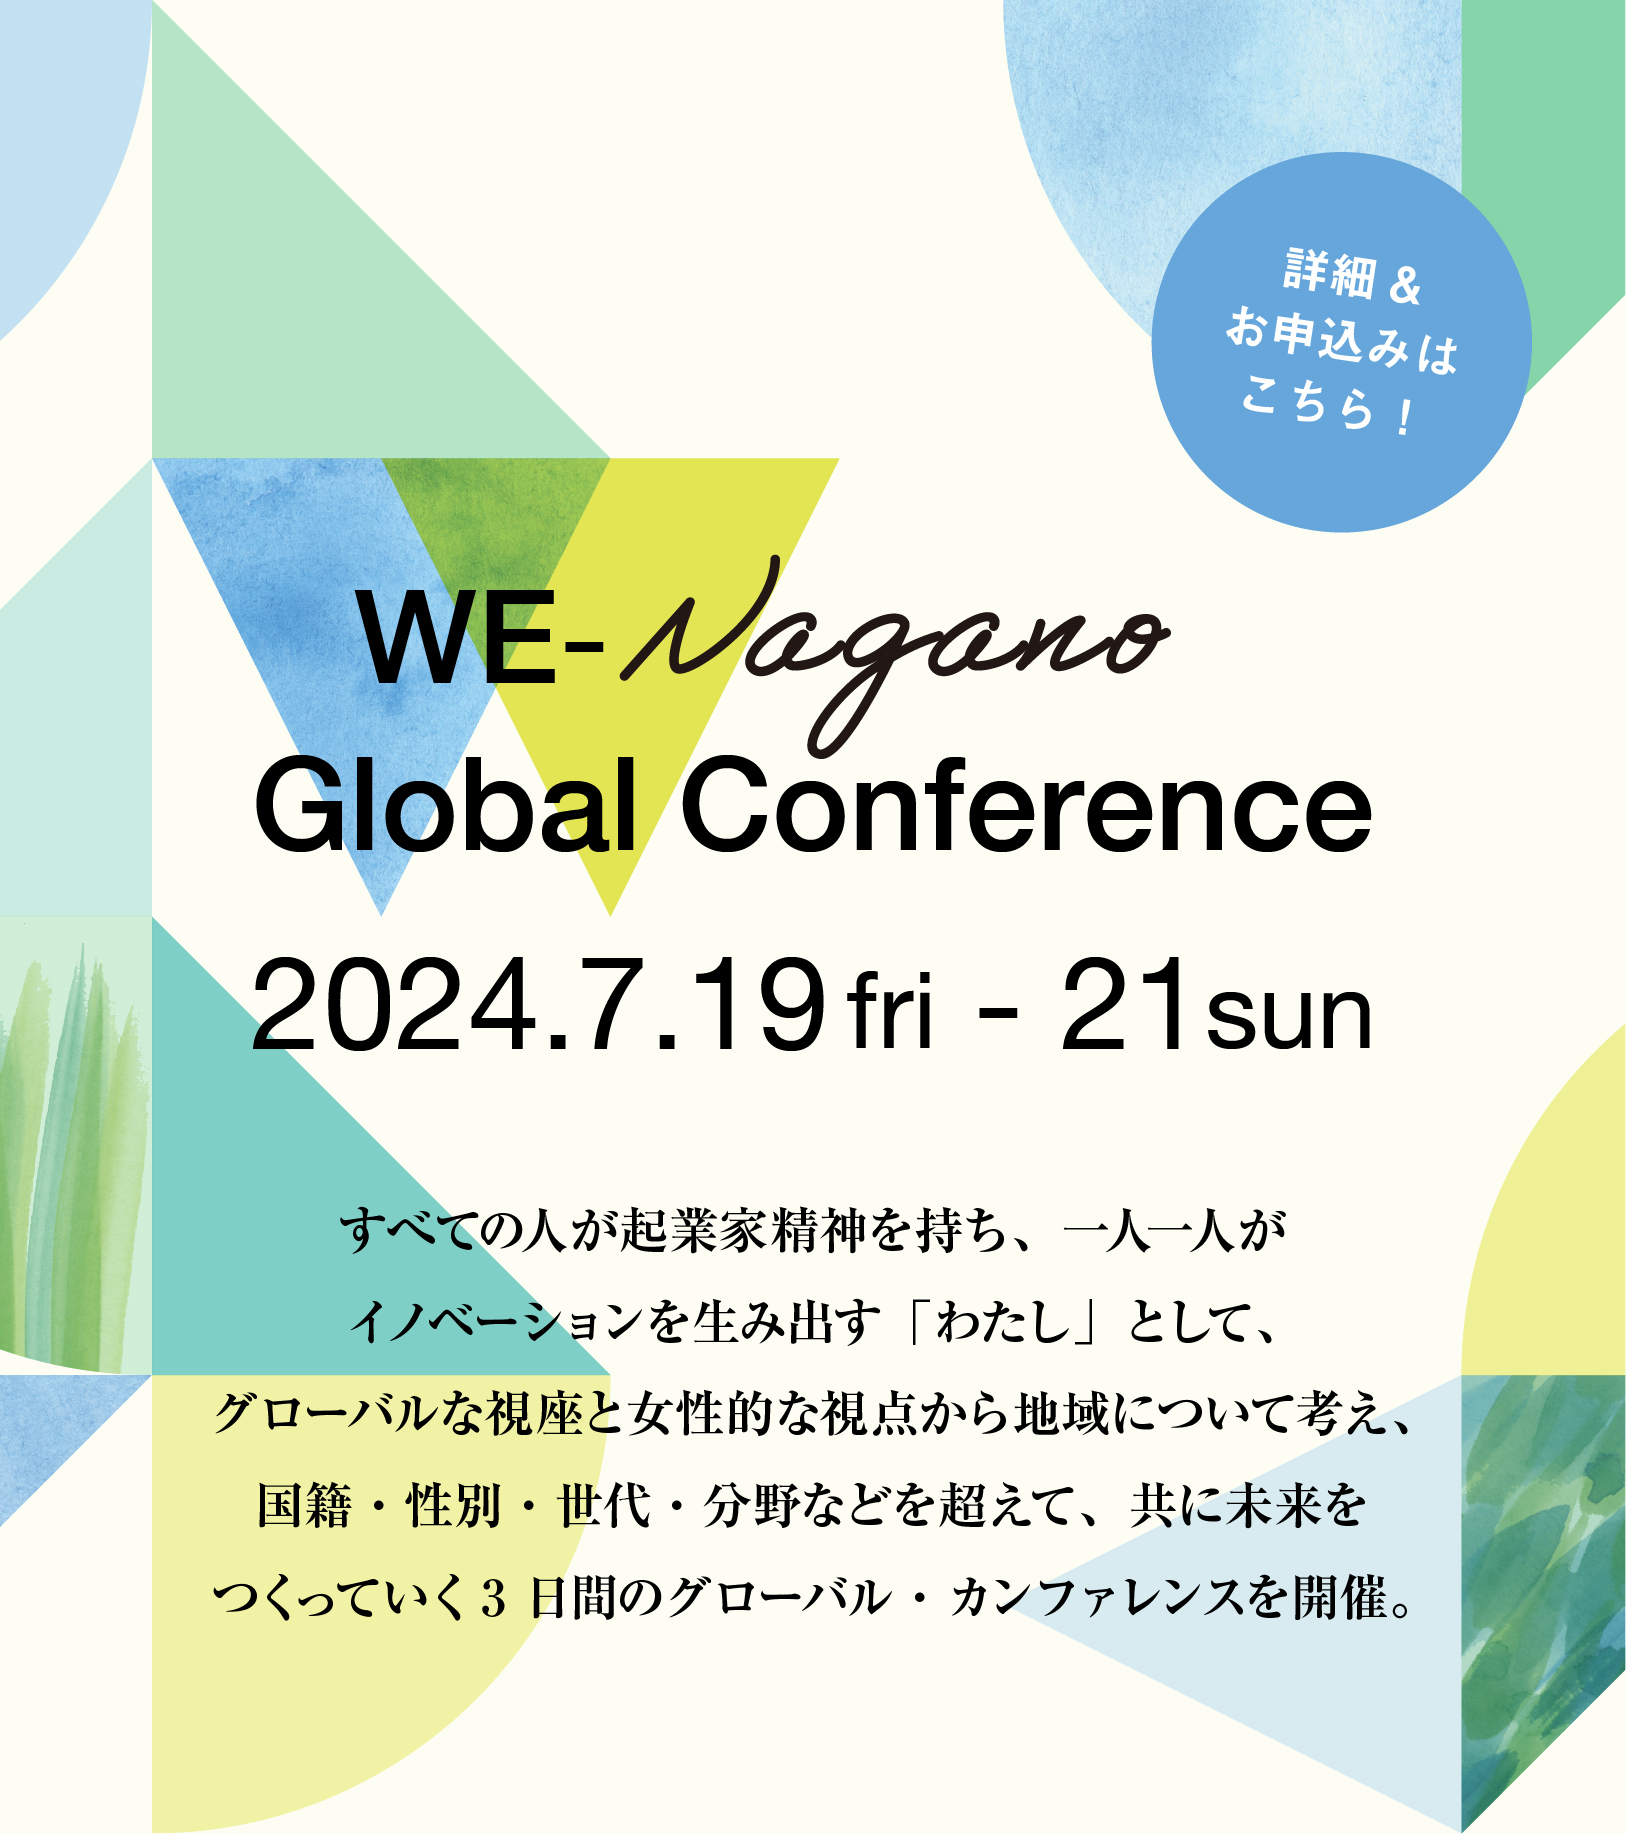 WE-Nagano Global Conference